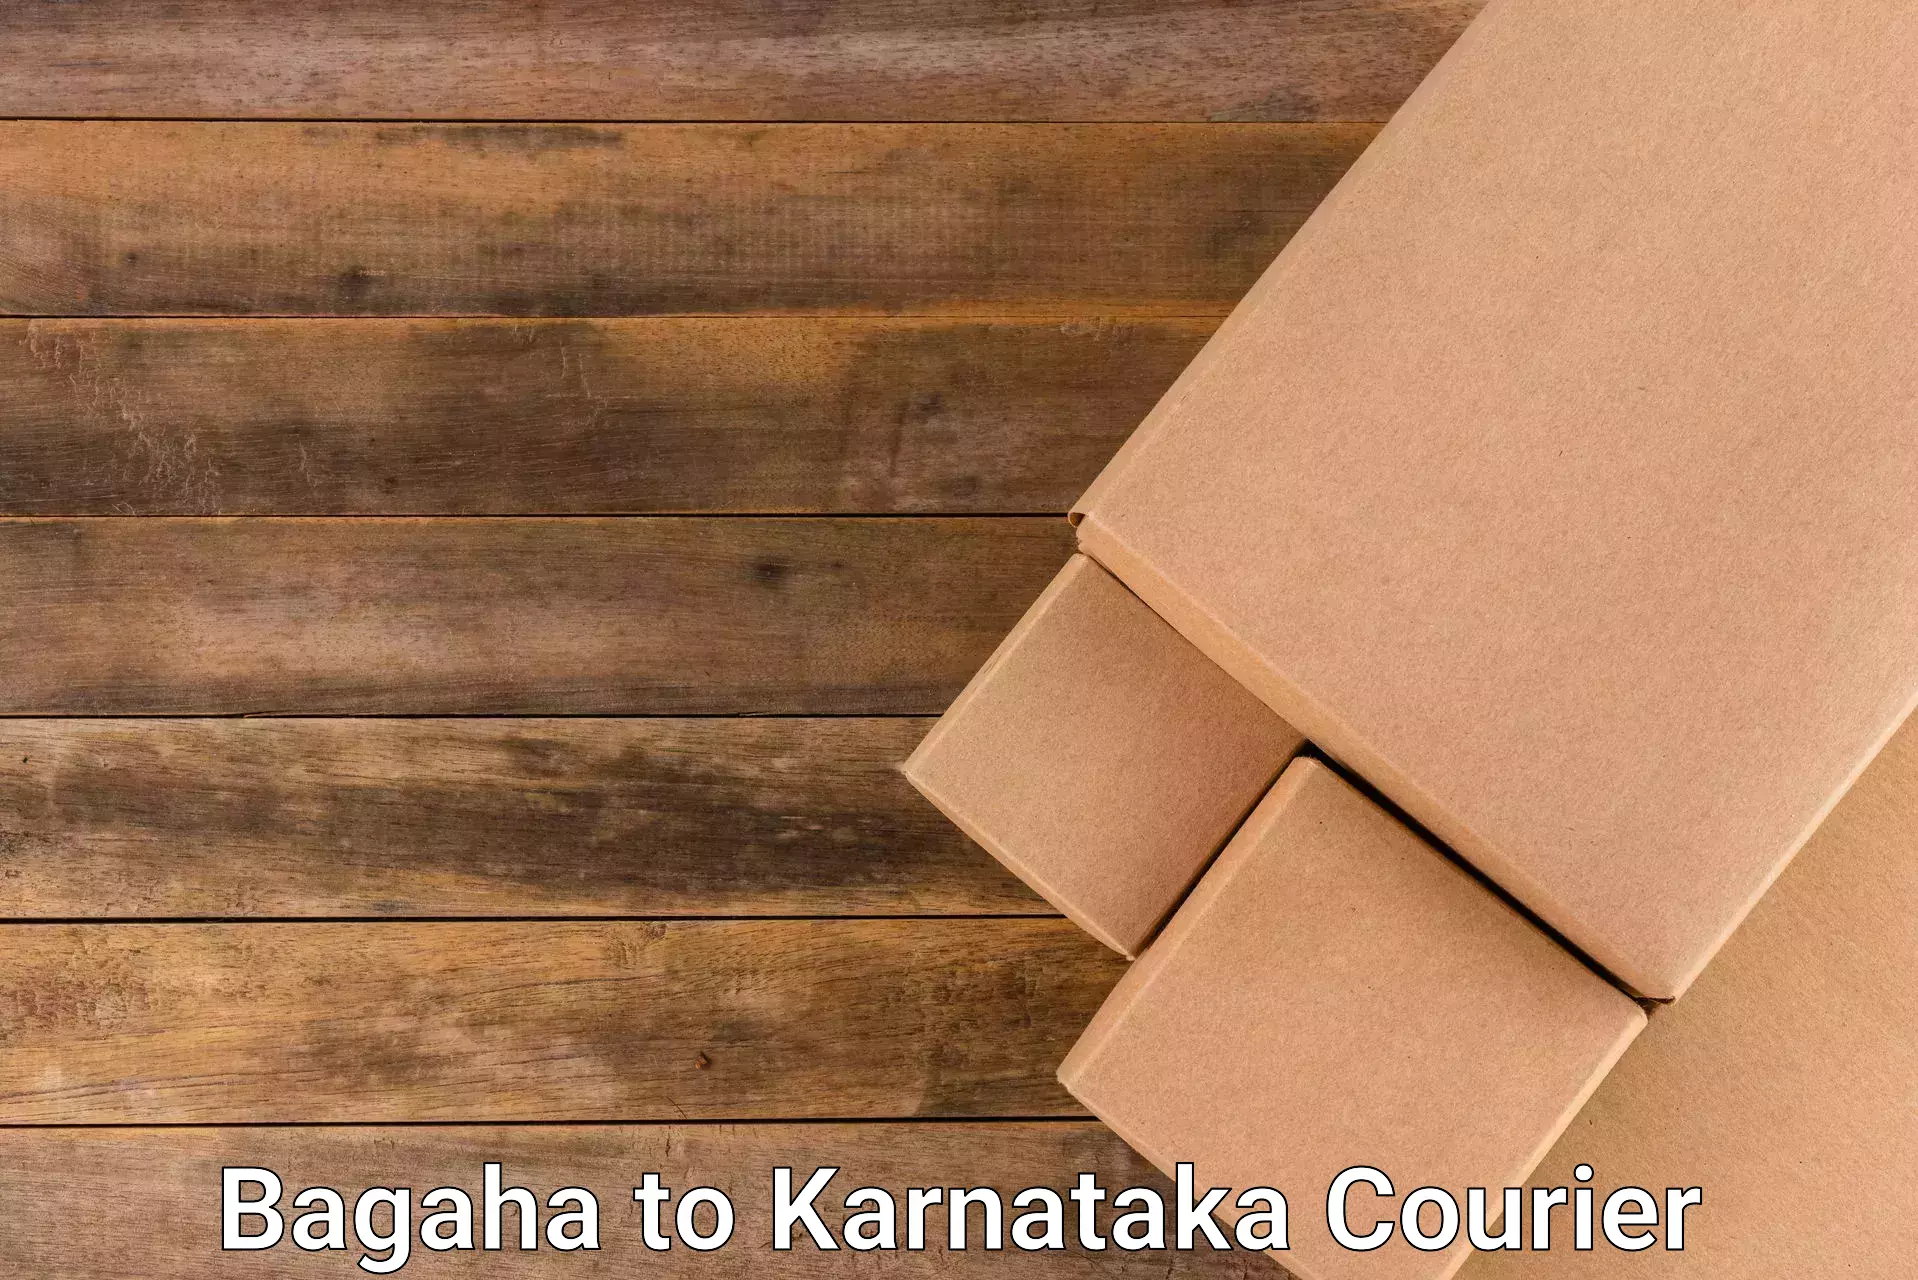 Customer-centric shipping Bagaha to Bengaluru